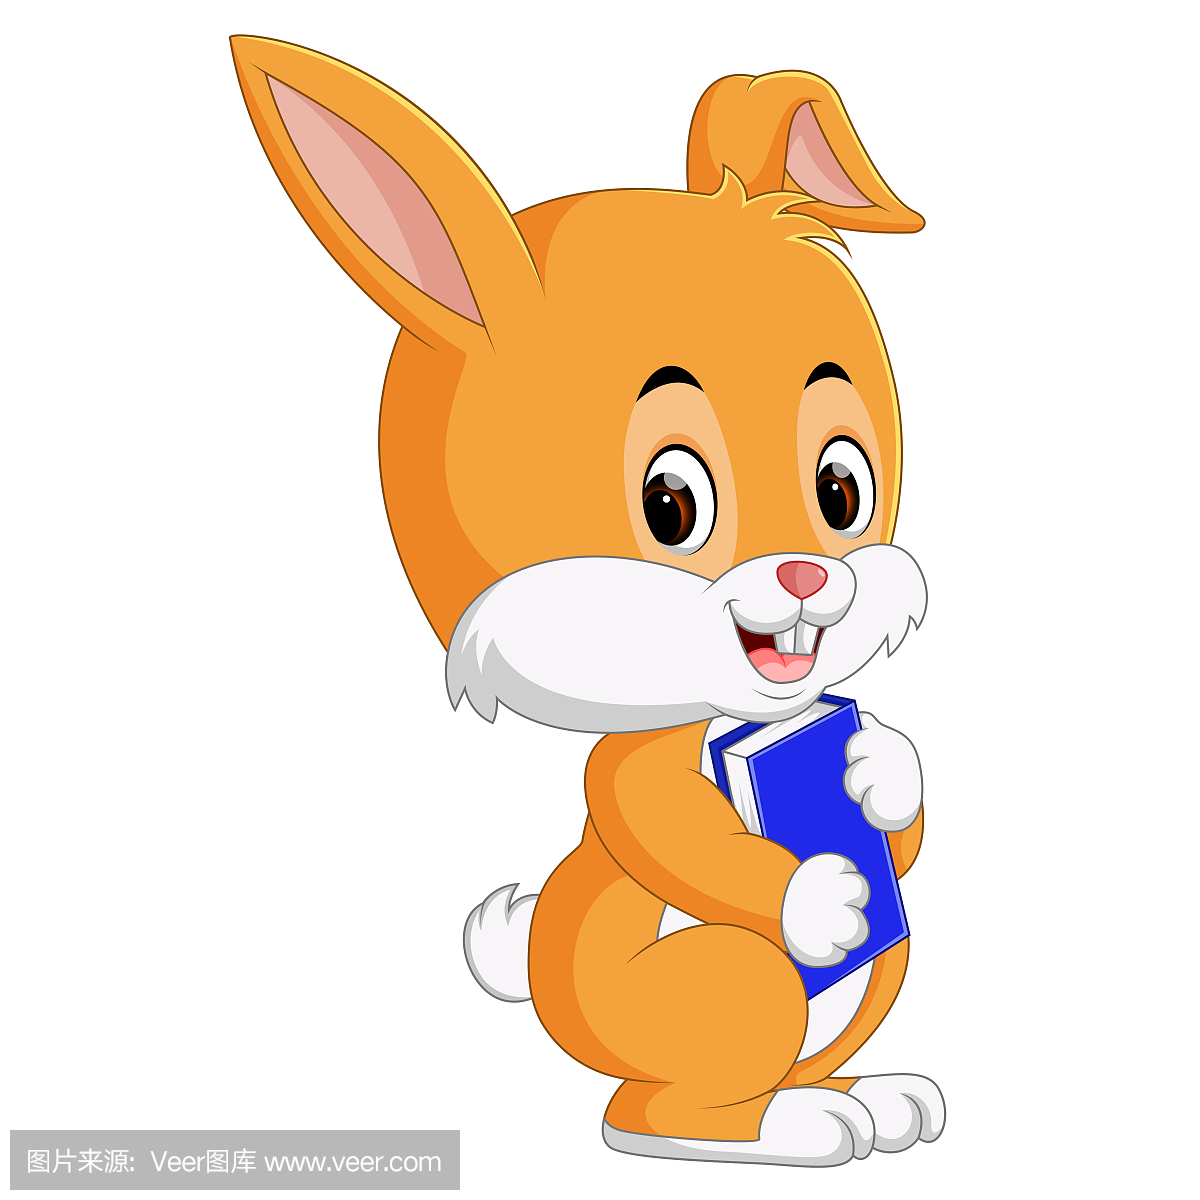 schnuffel bunny 卡通兔子壁纸_卡通_太平洋科技